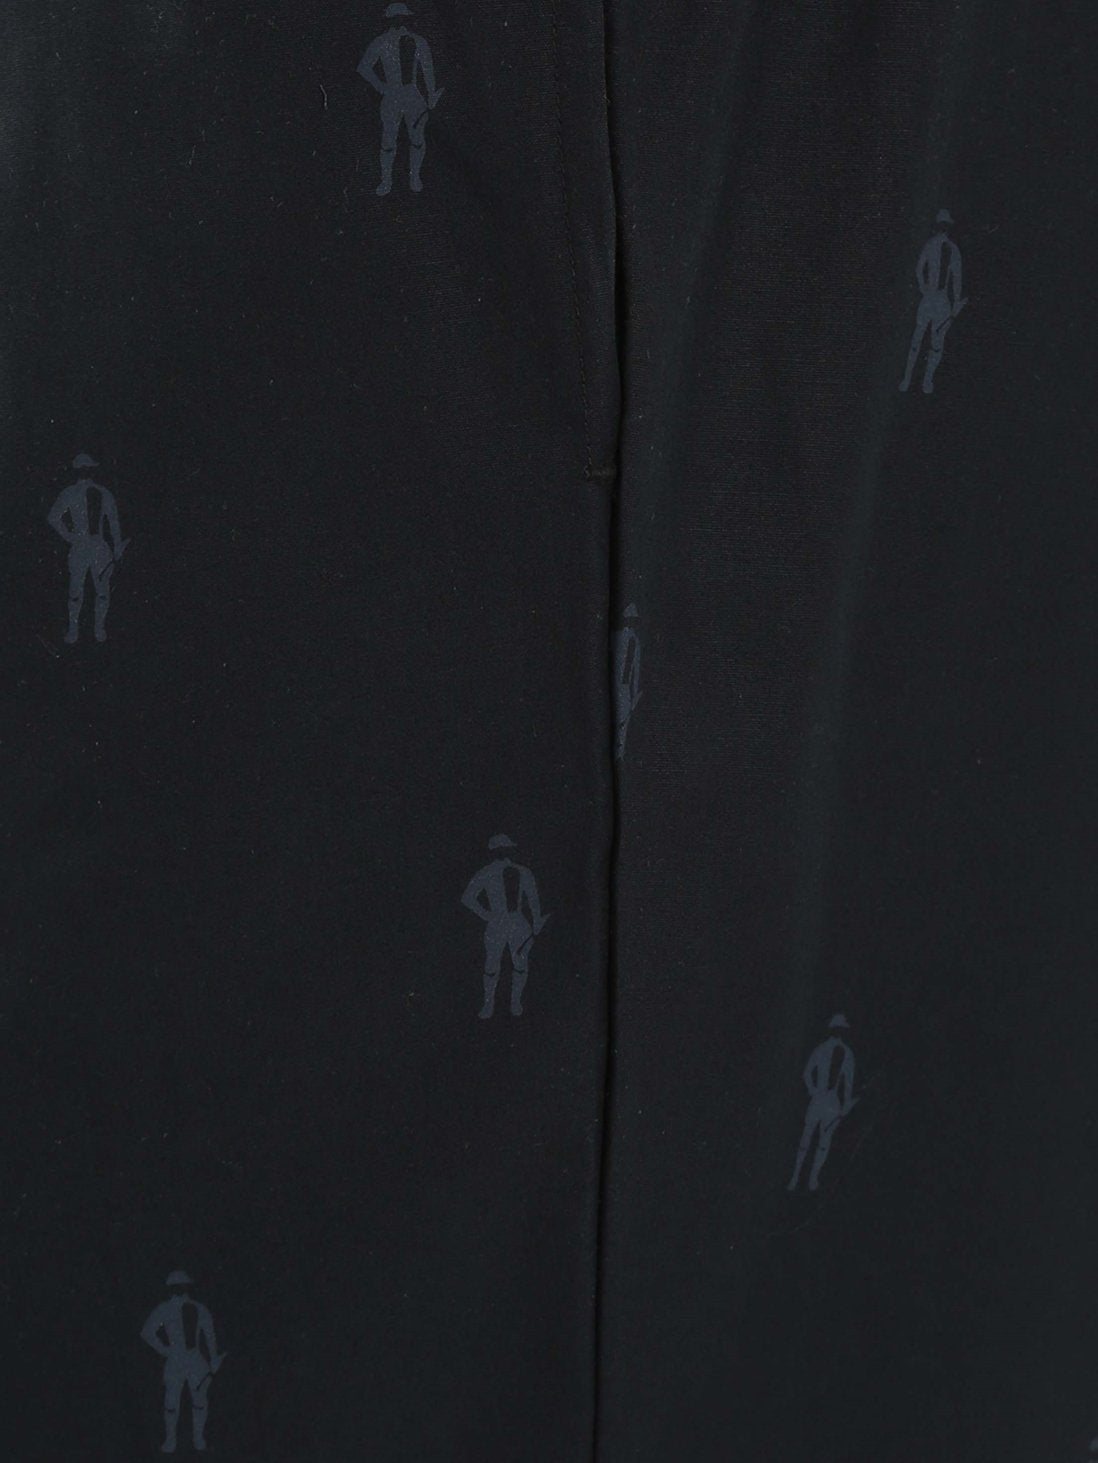 Jockey Men's Cotton Shorts (8901326151747_9005_X-Large_Black and Graphite)